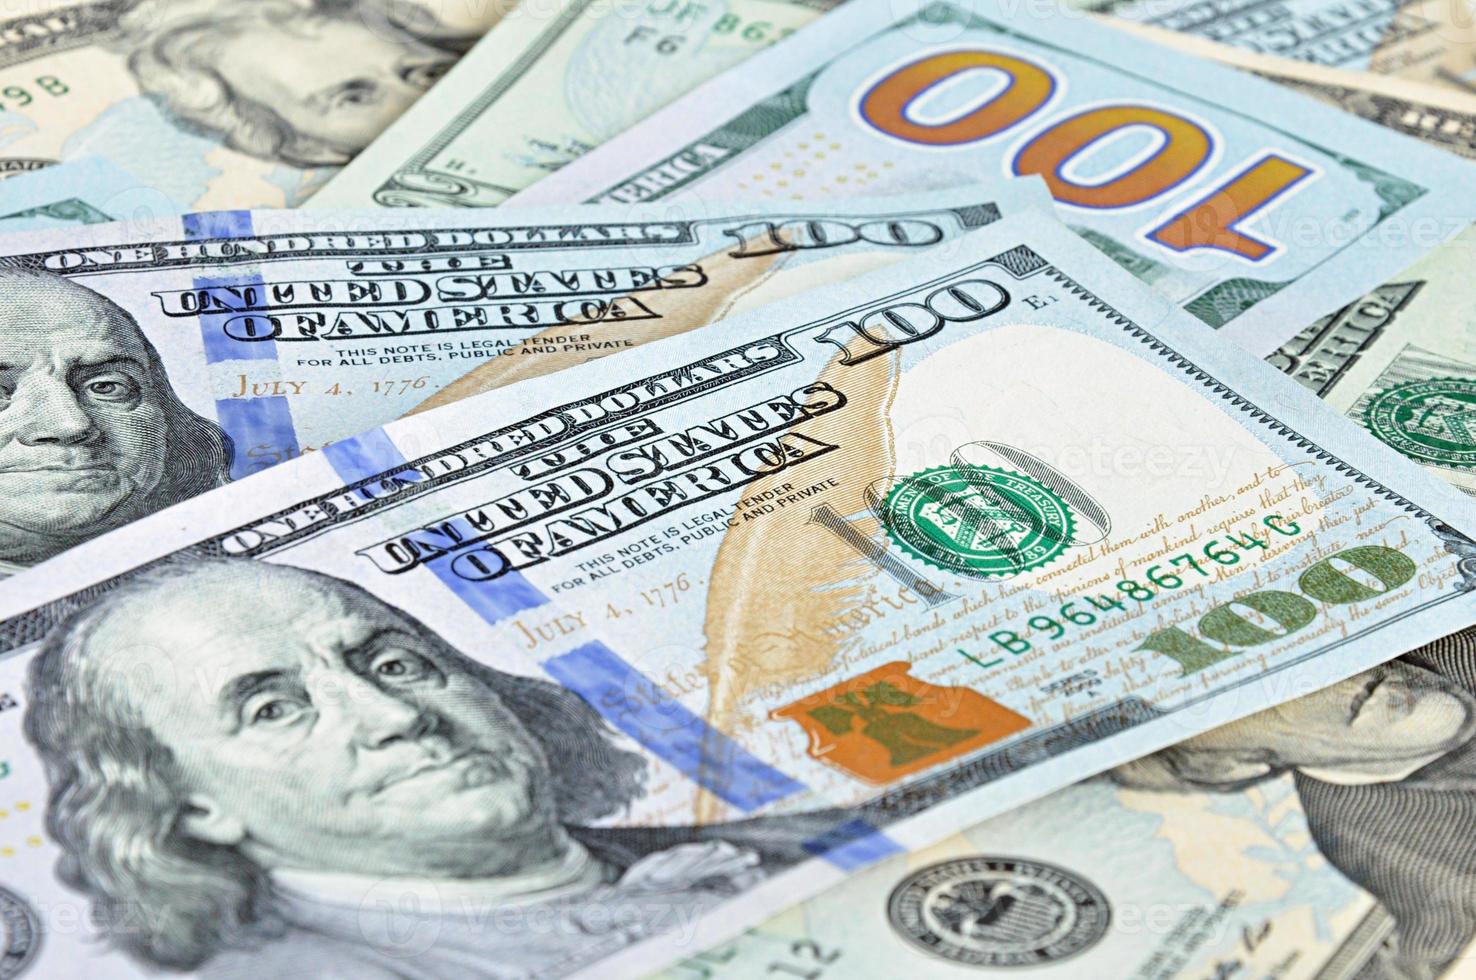 Money - United States dollars (USD) bills photo